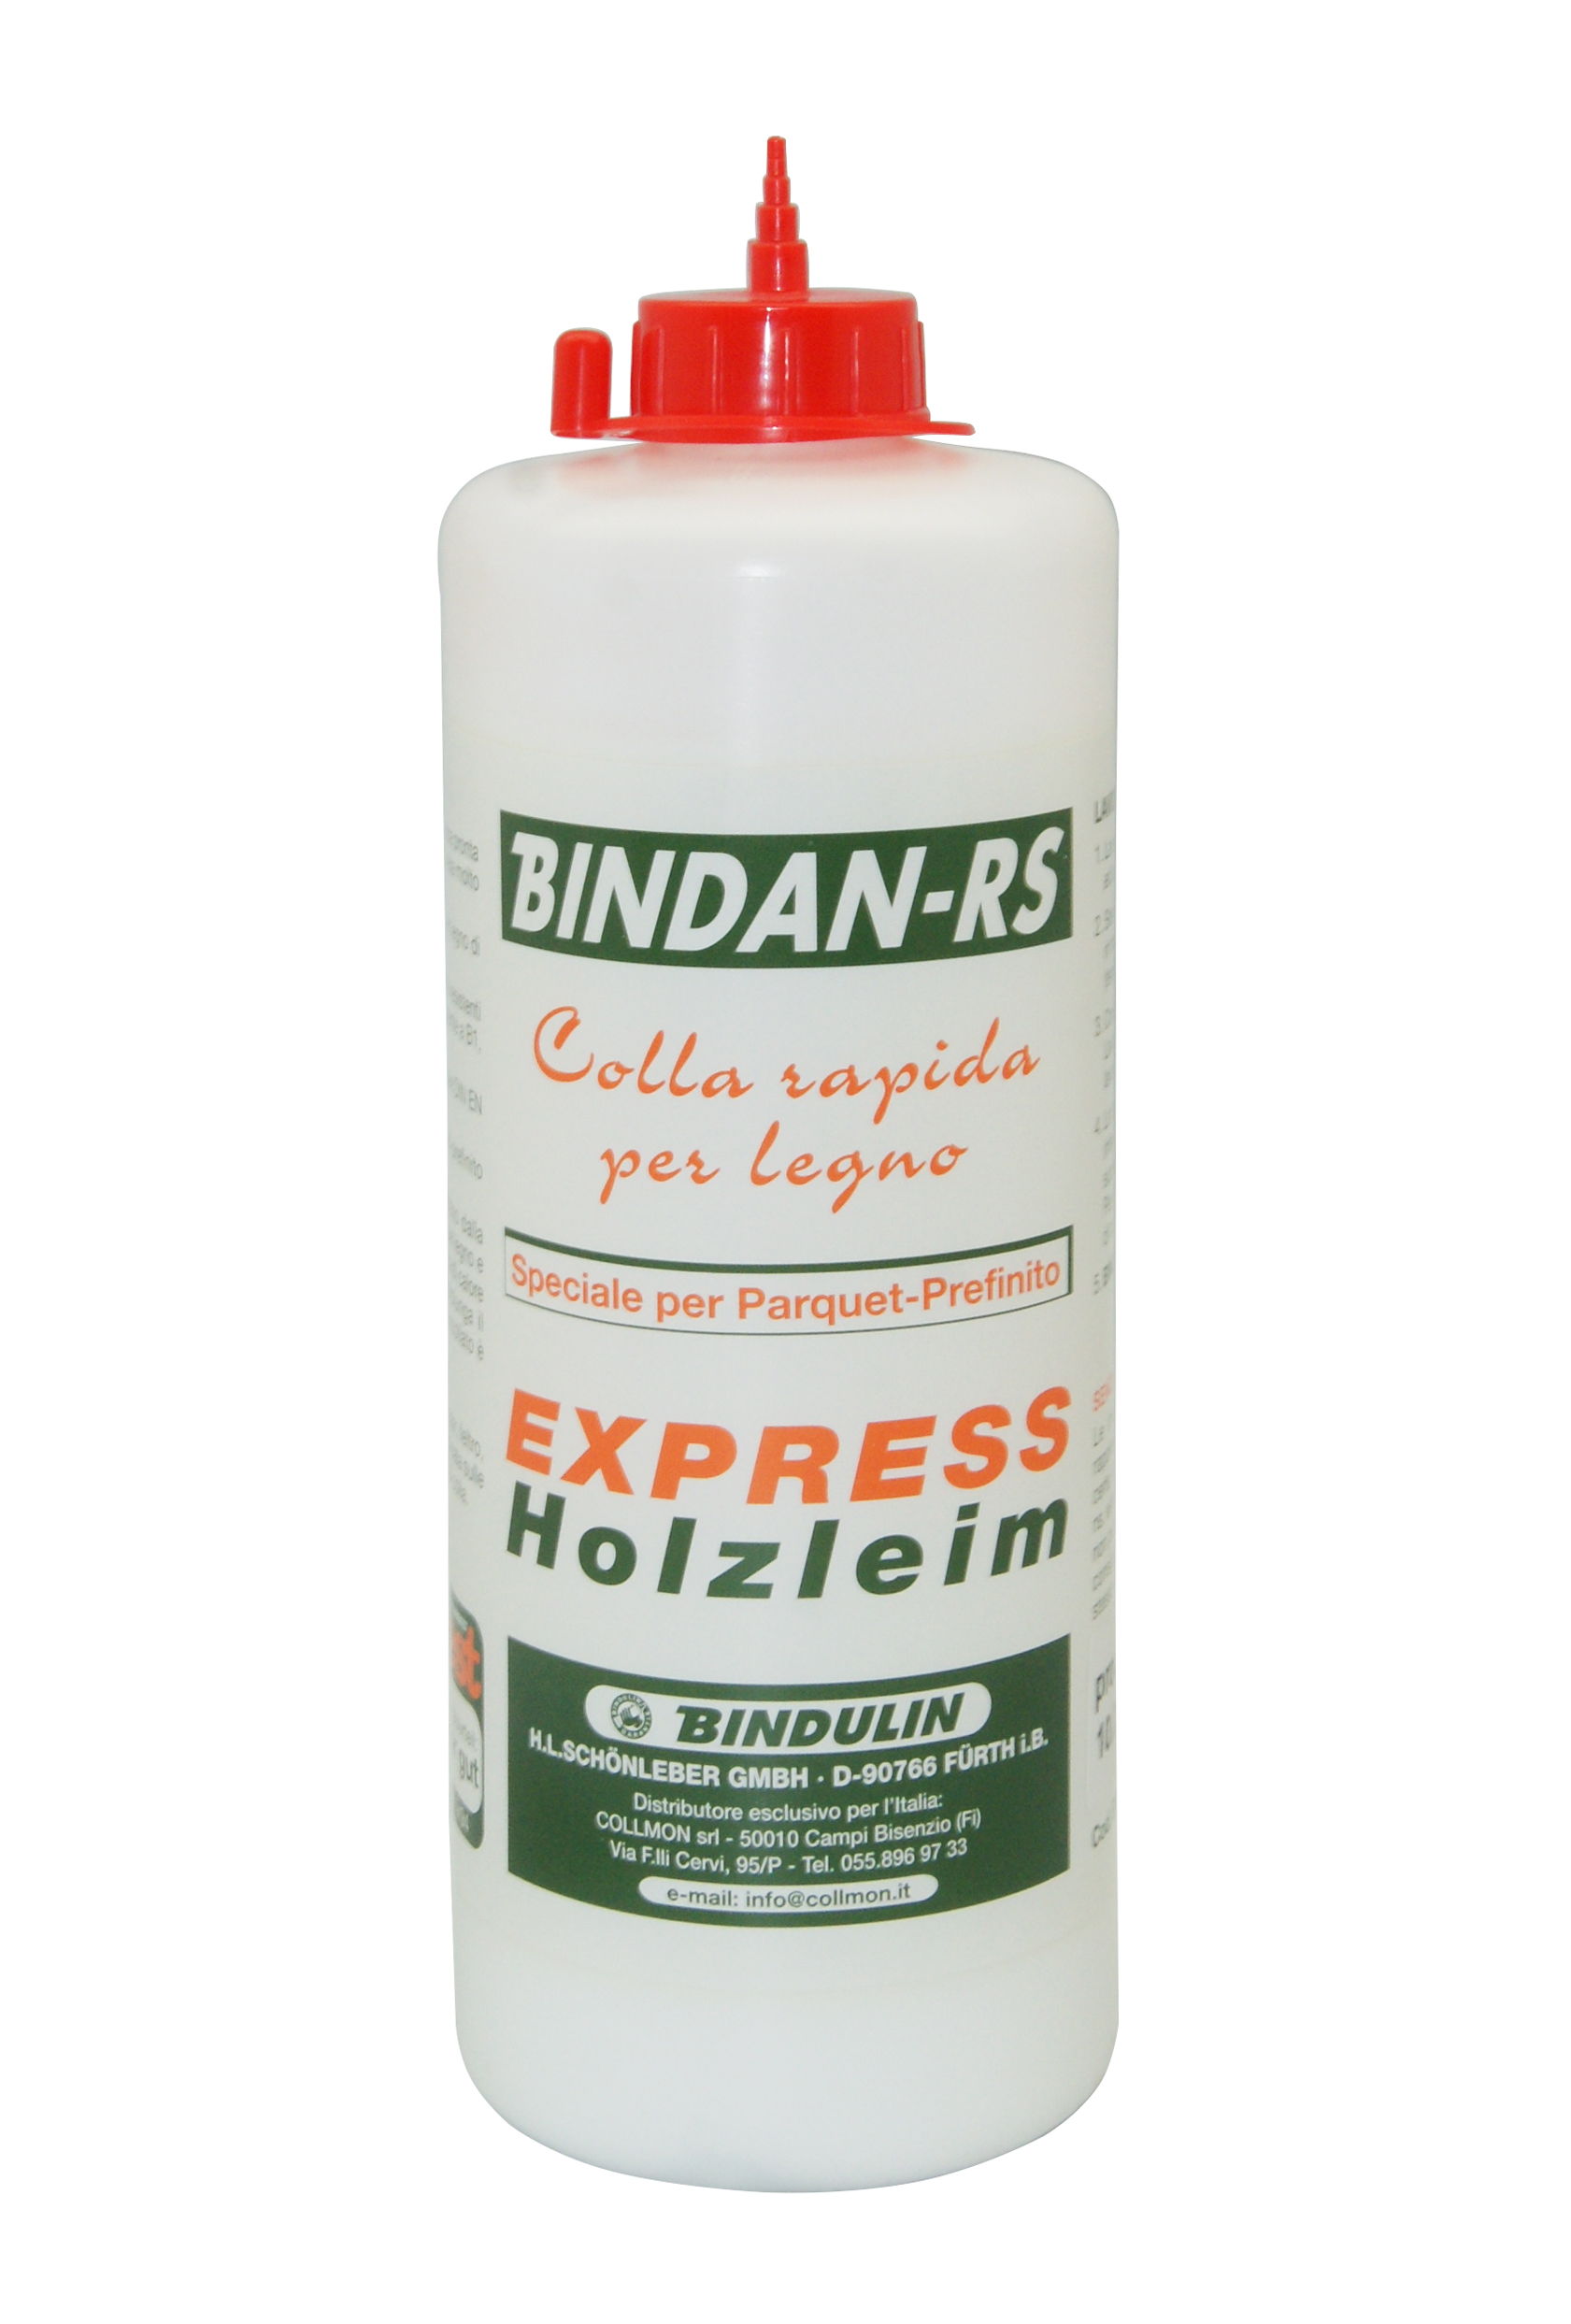 Bindulin - bindan-rs vinilico b2/d2 trasp. 1 kg